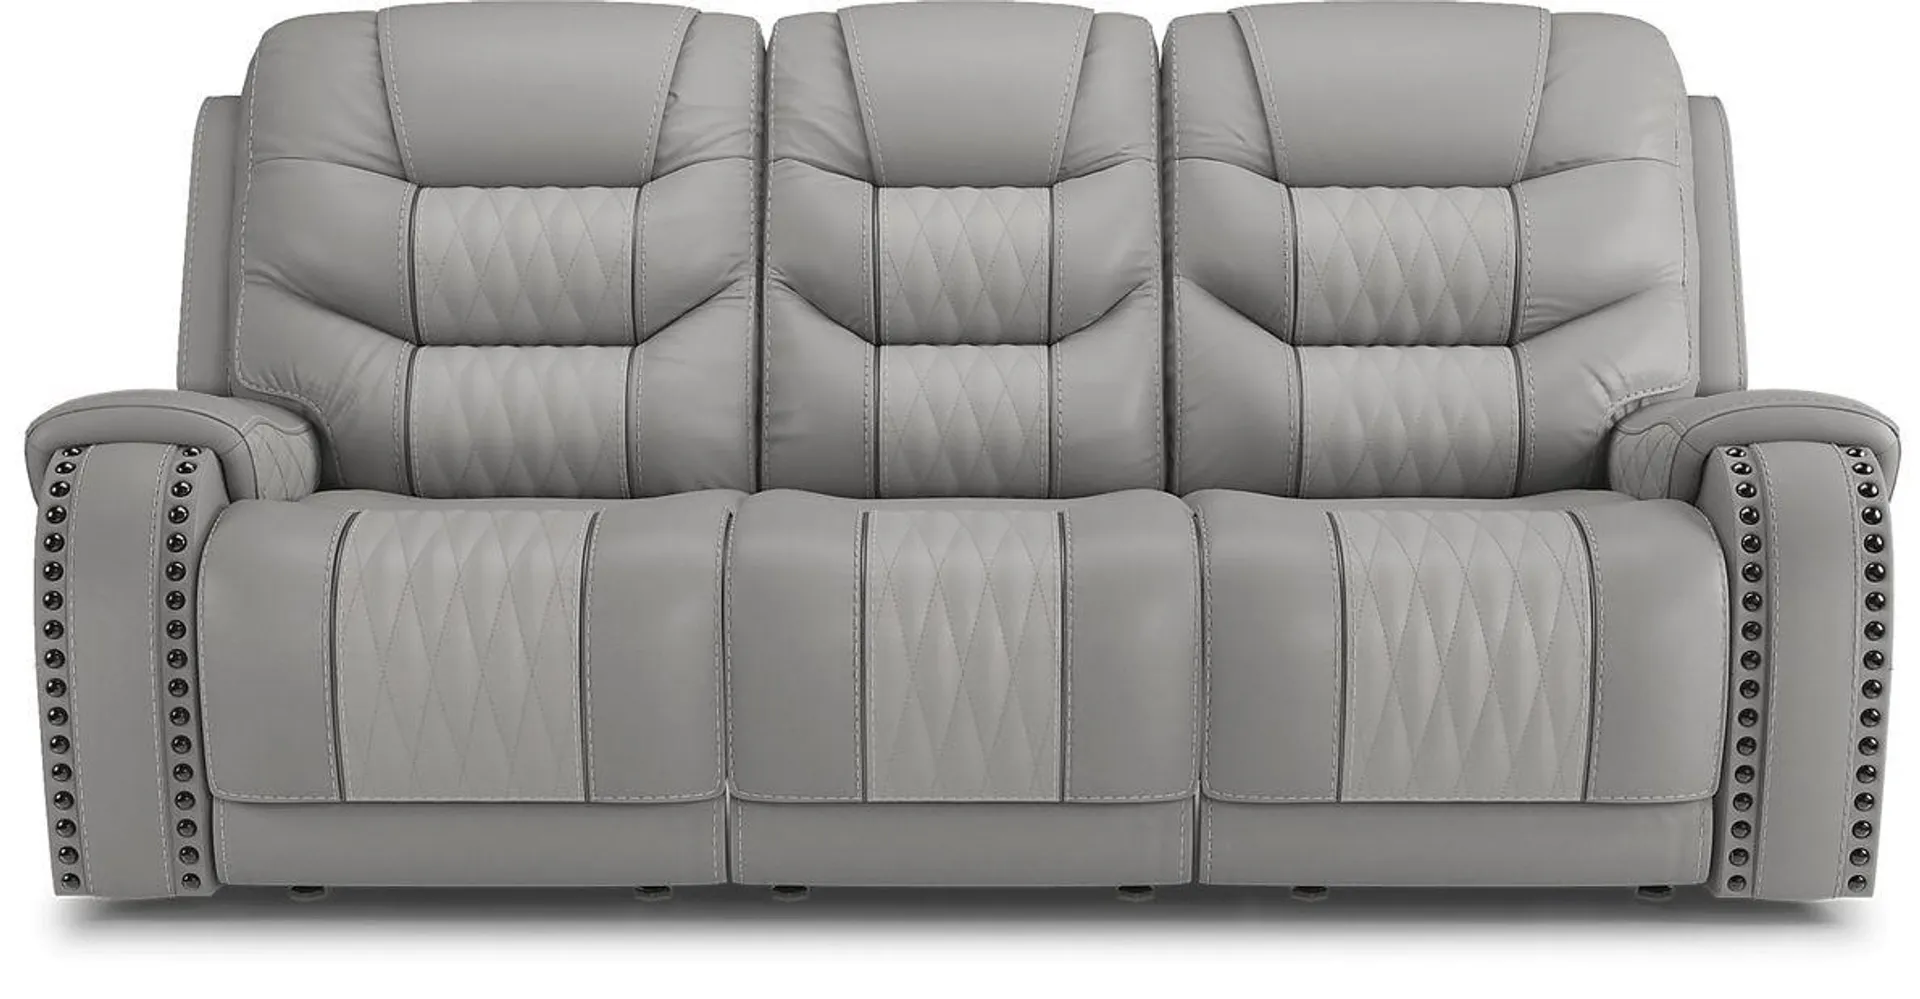 Headliner Leather Non-Power Reclining Sofa